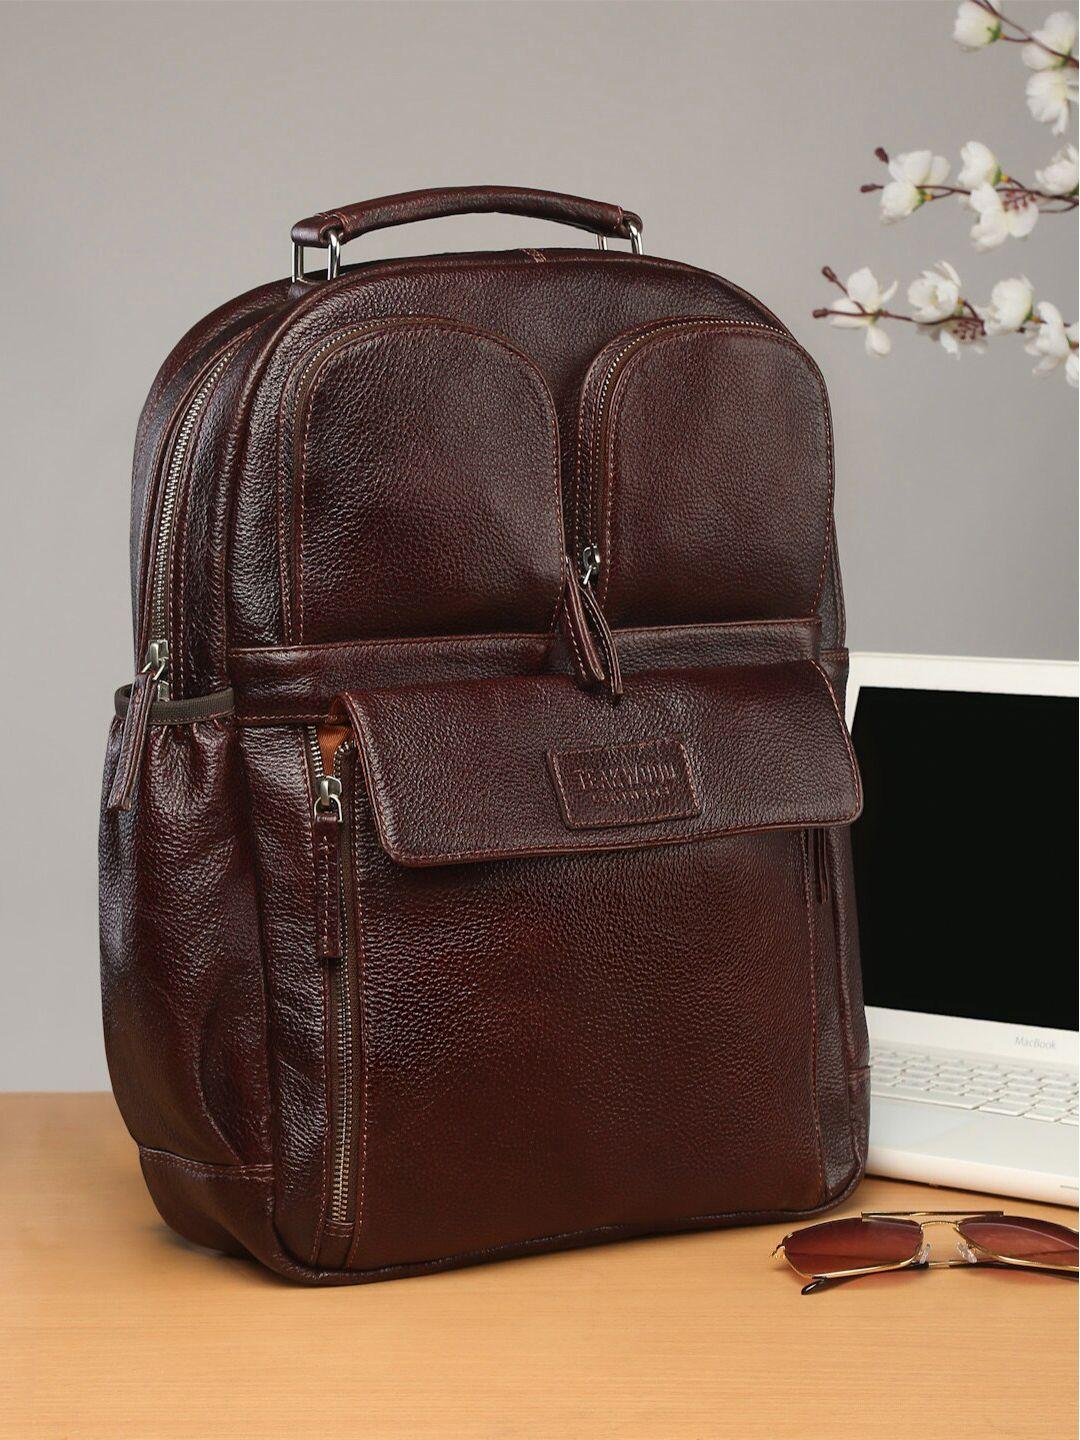 teakwood leathers brown leather backpack